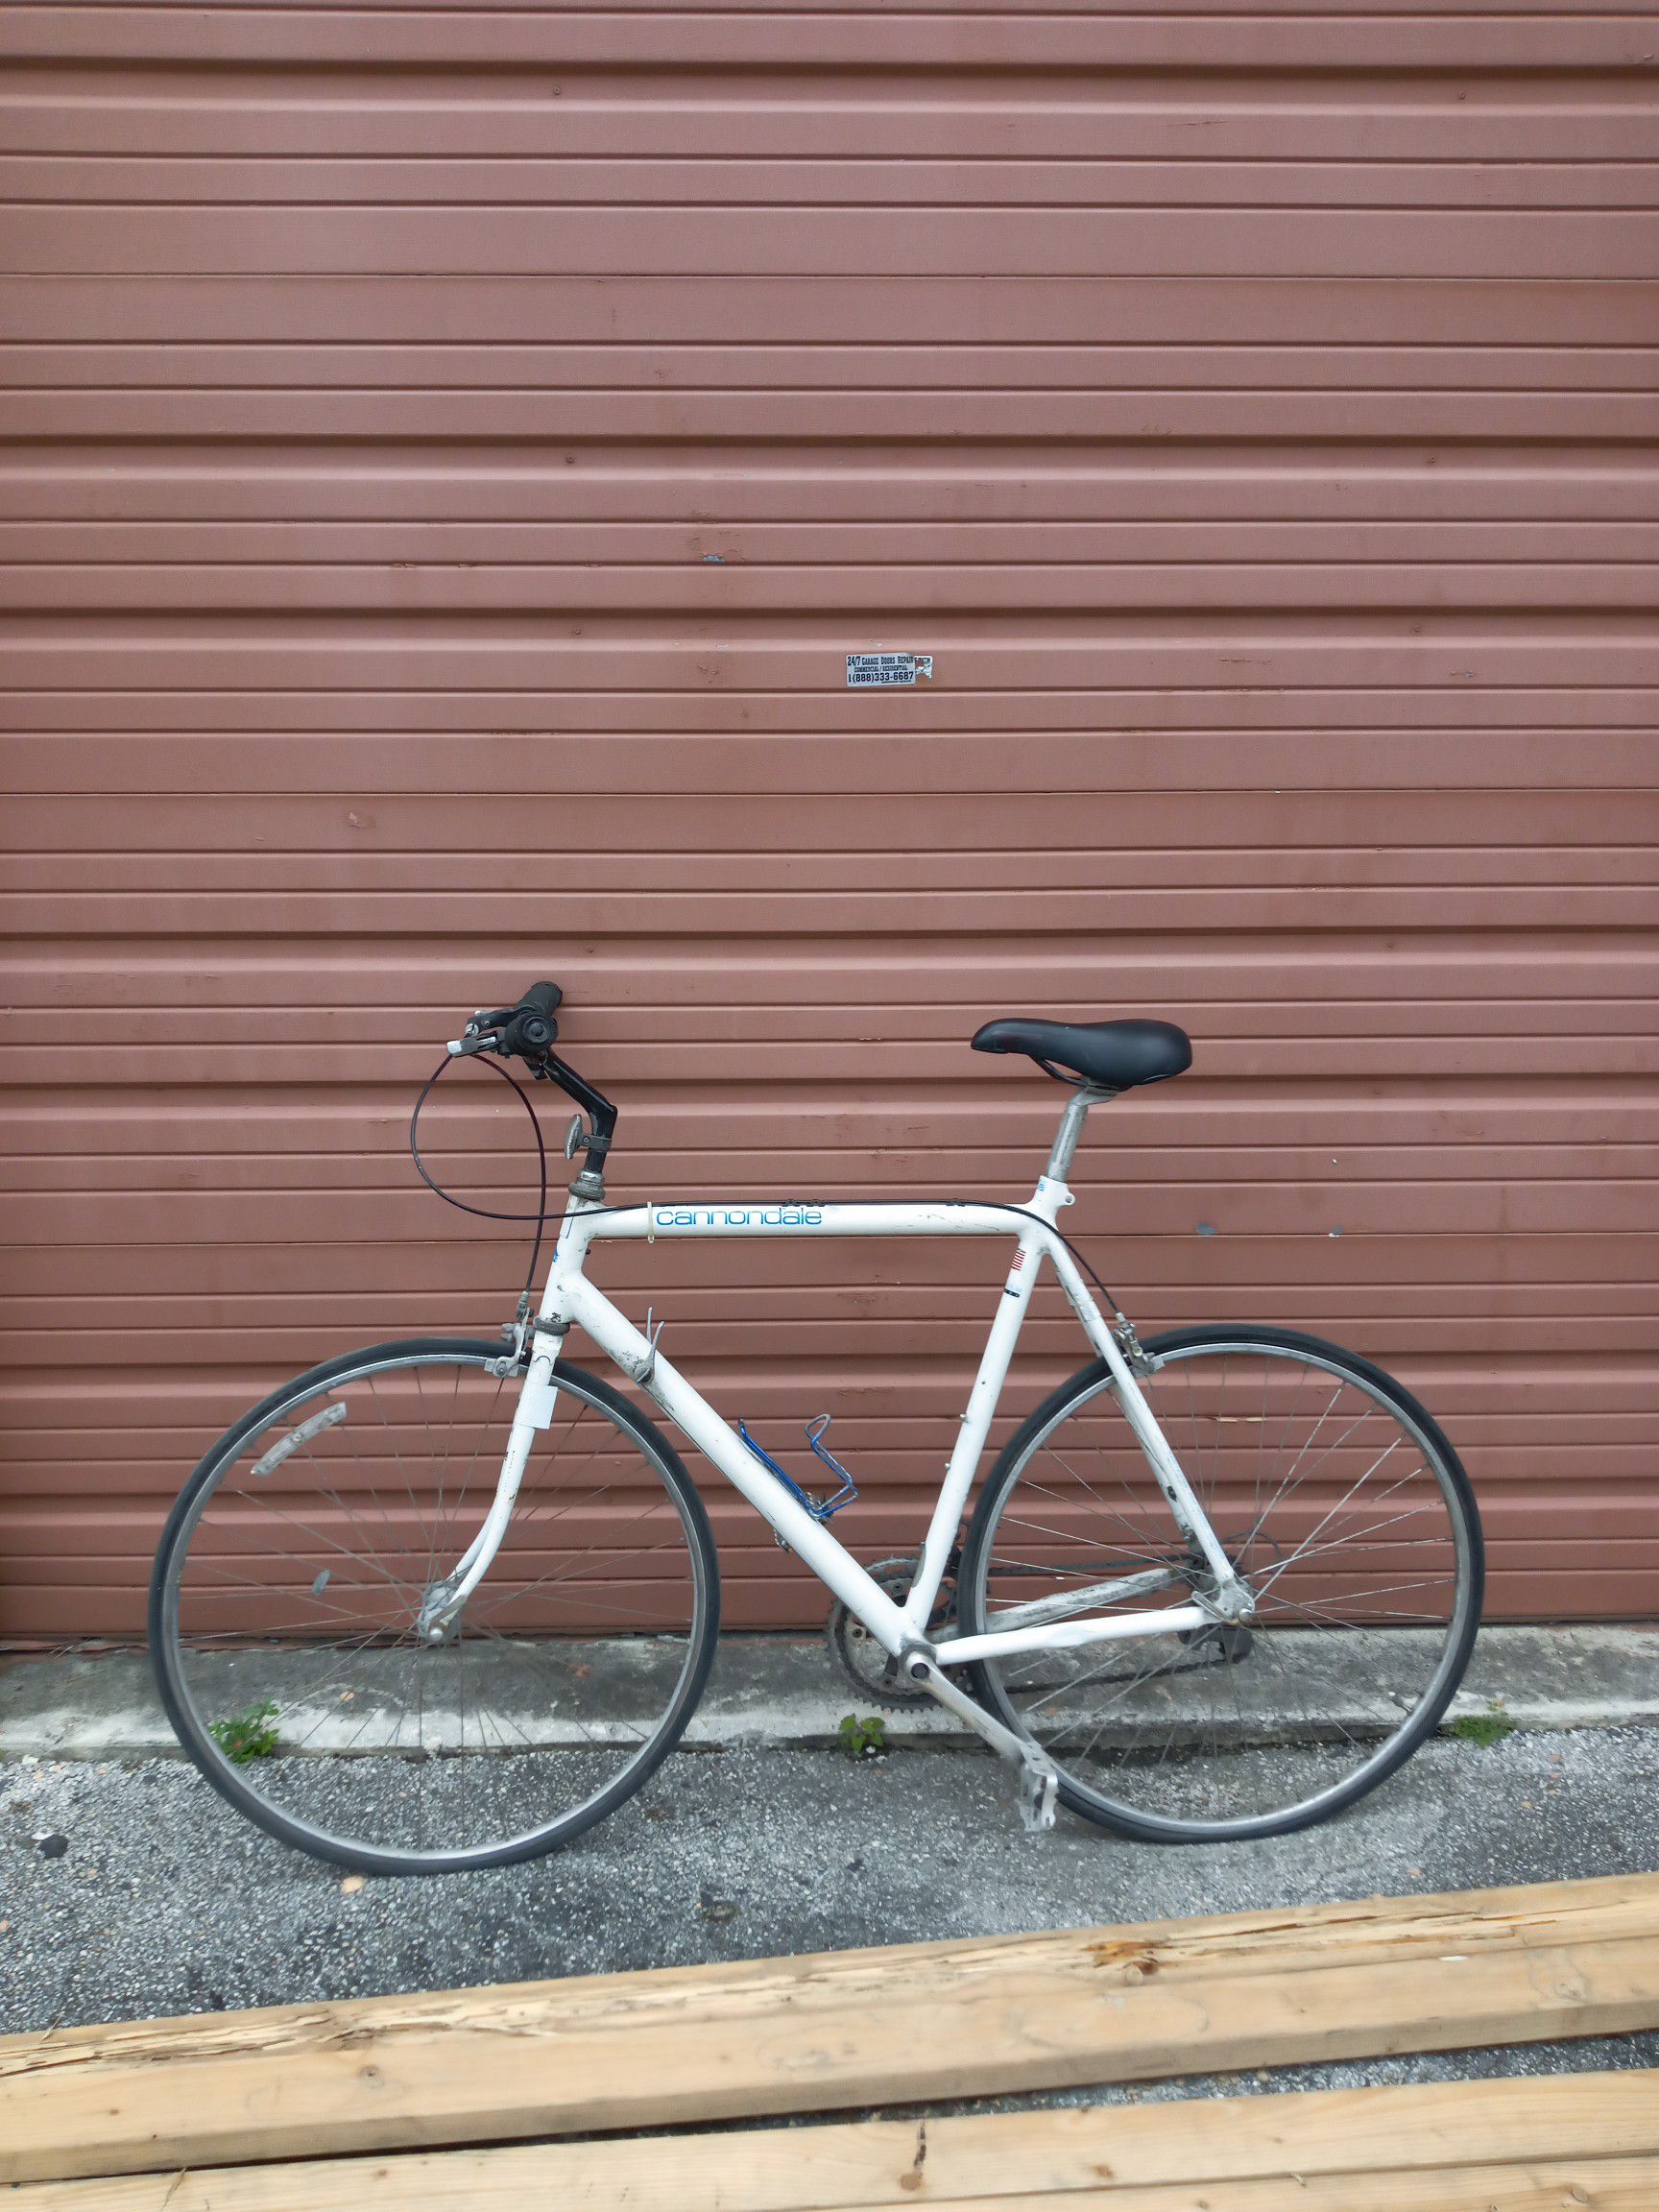 Canondale classic bike needs tlc. It is a great road bike. Large frame, I am 6'2"